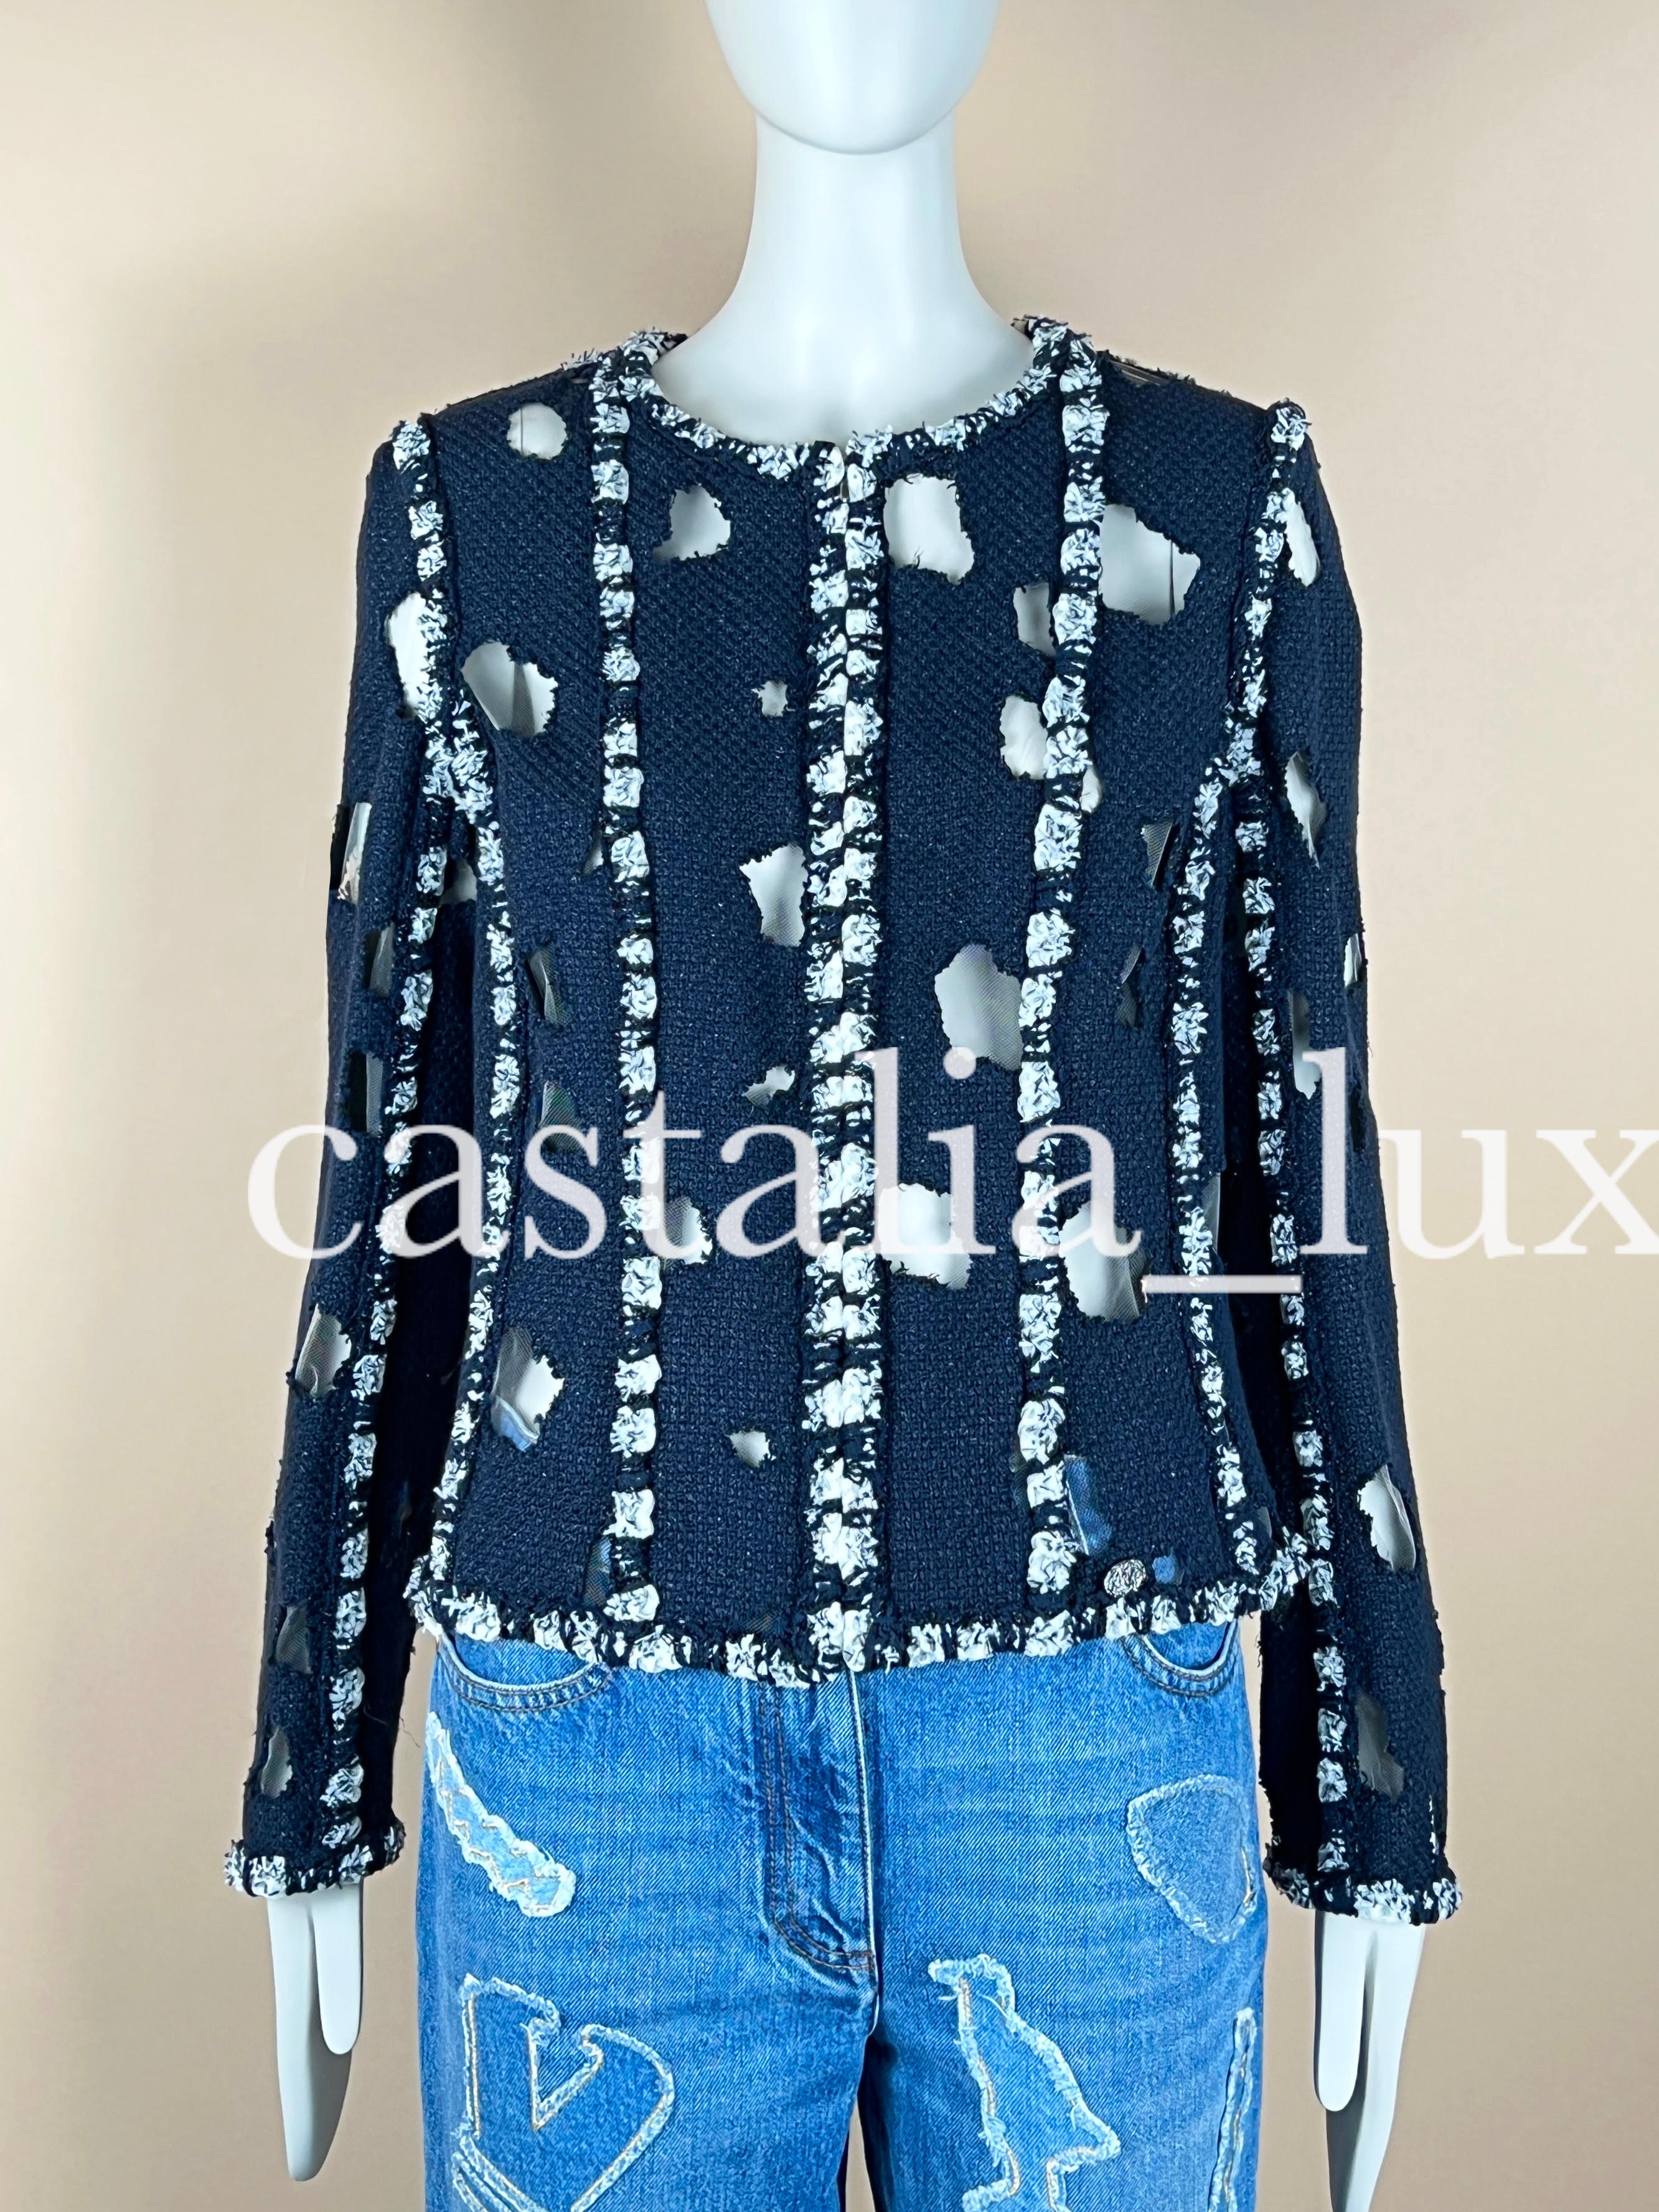 Chanel Iconic Metropolitan Museum Tweed Jacket For Sale 8